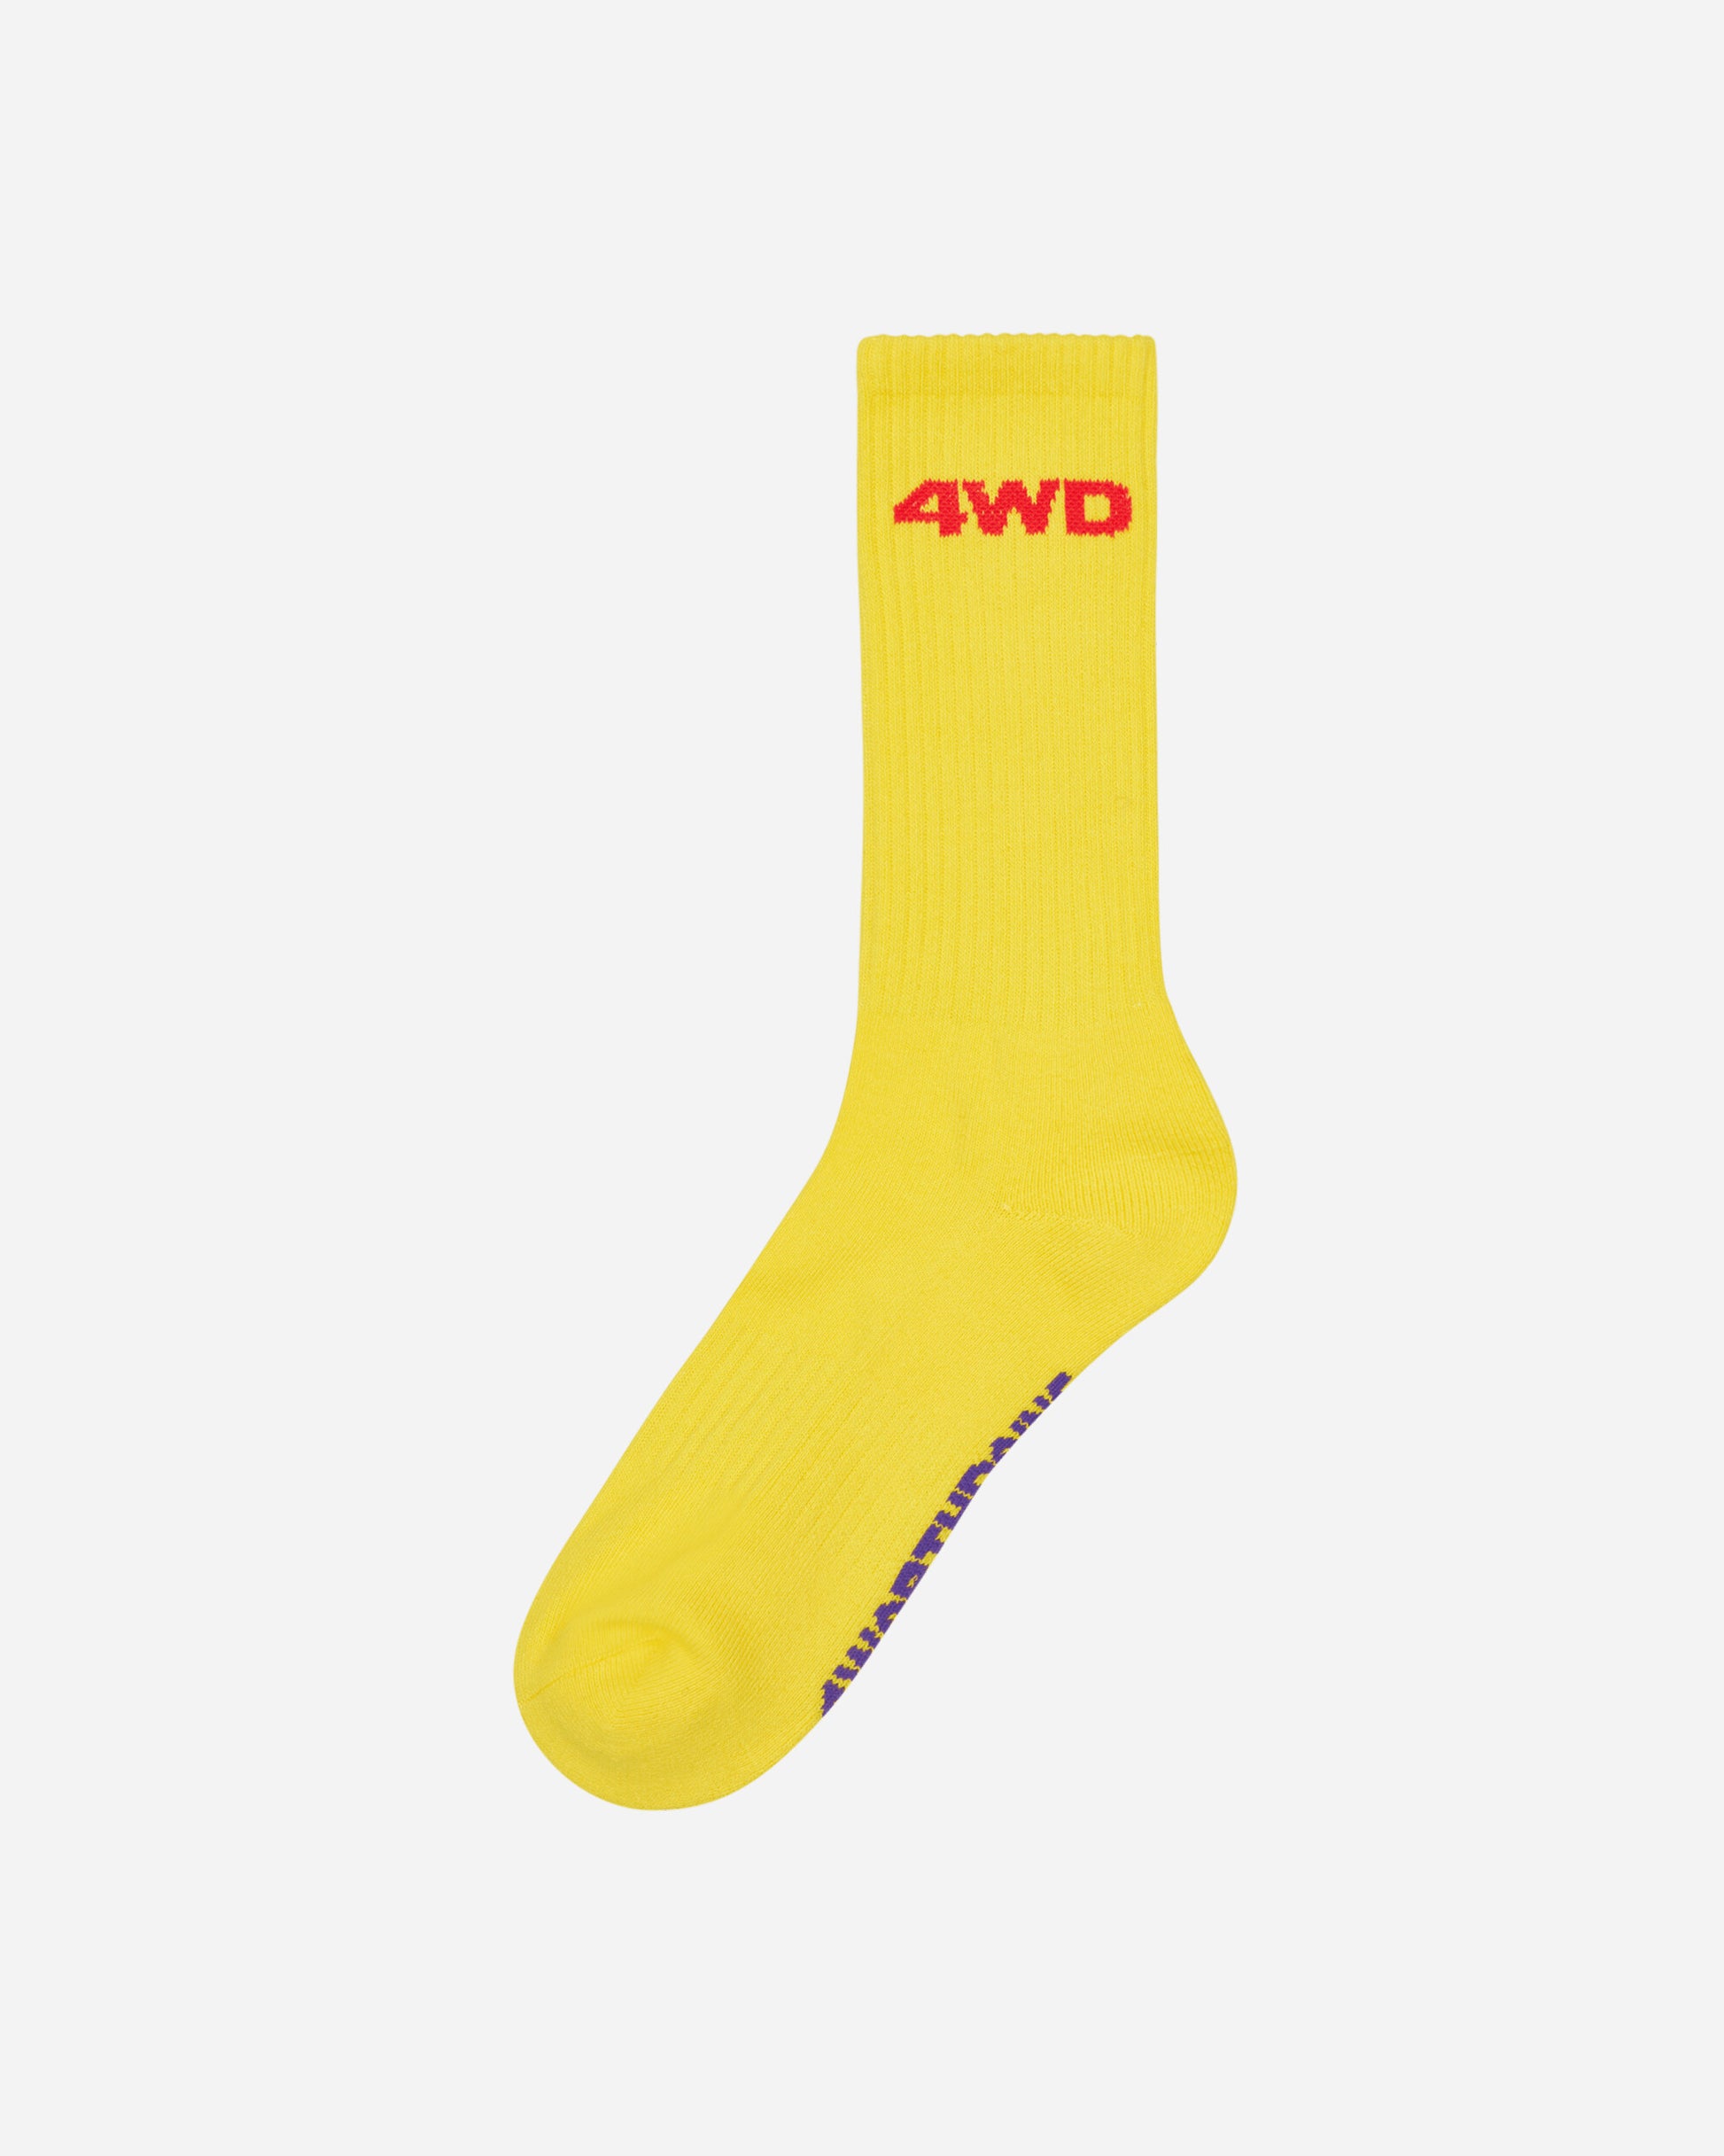 4 Worth Doing 4Wd Logo Socks Yellow Underwear Socks 4WDSS23SC1 YELLOW